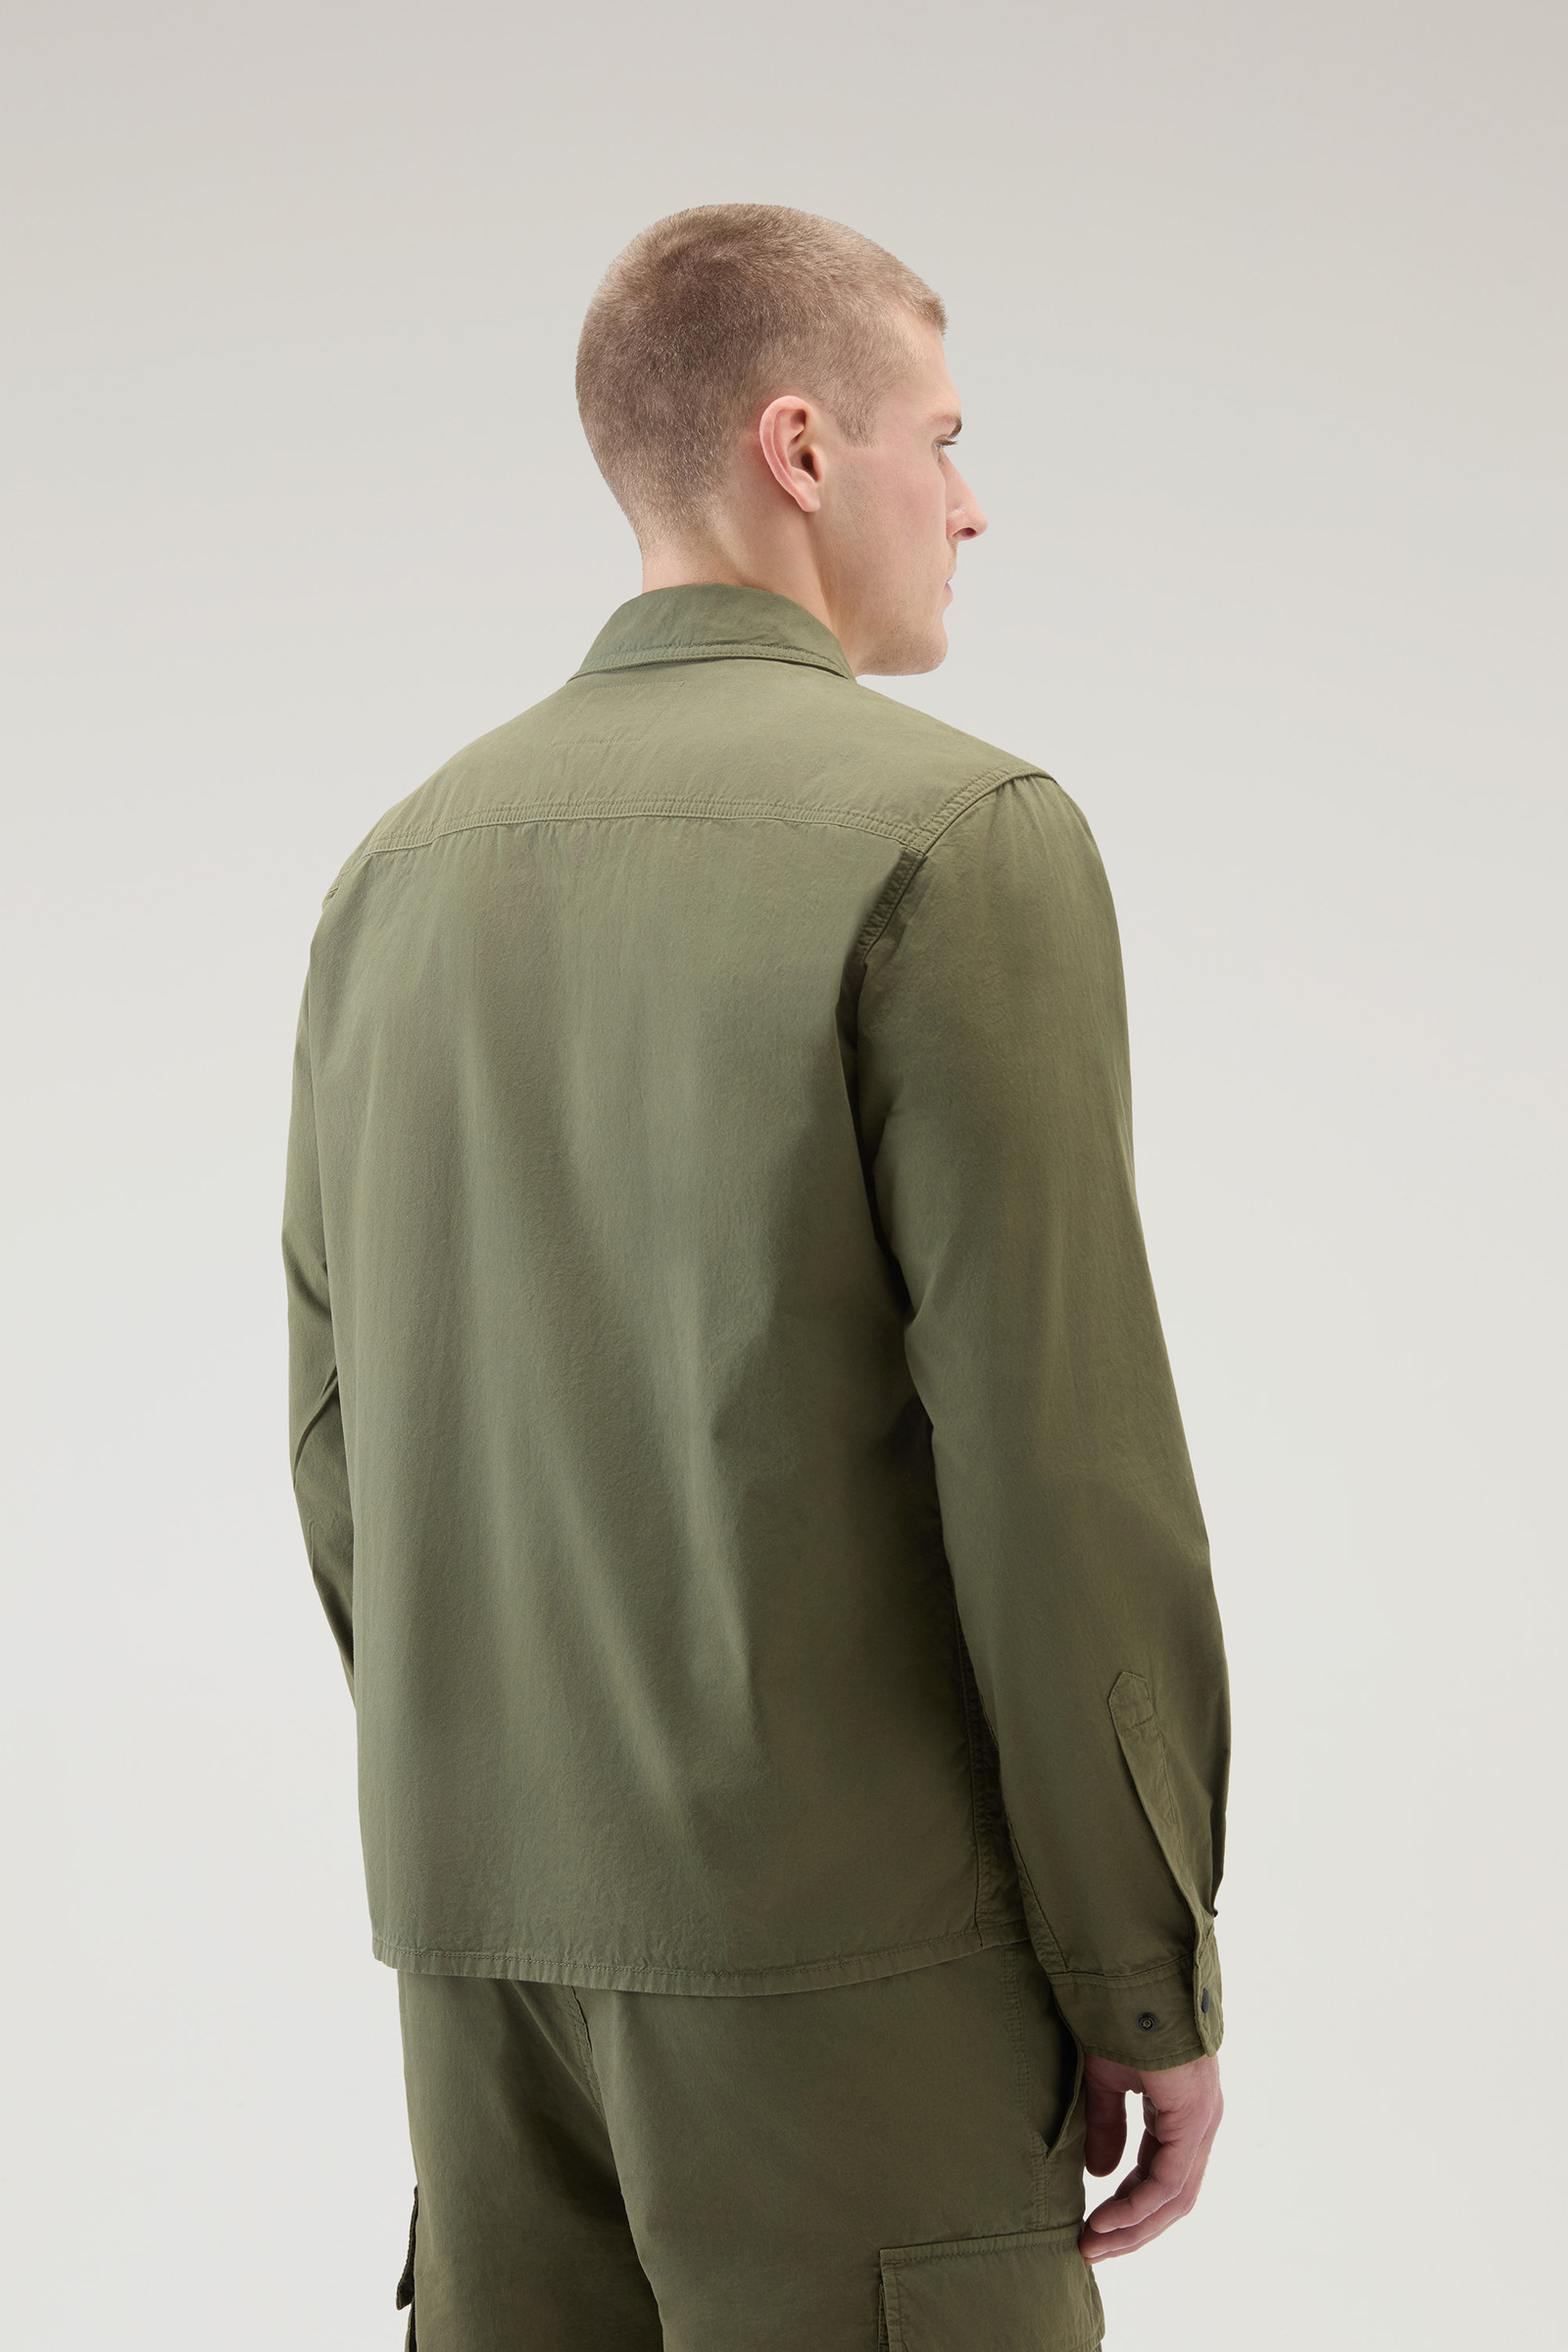 Woolrich Crinkle shirt jacket - Green